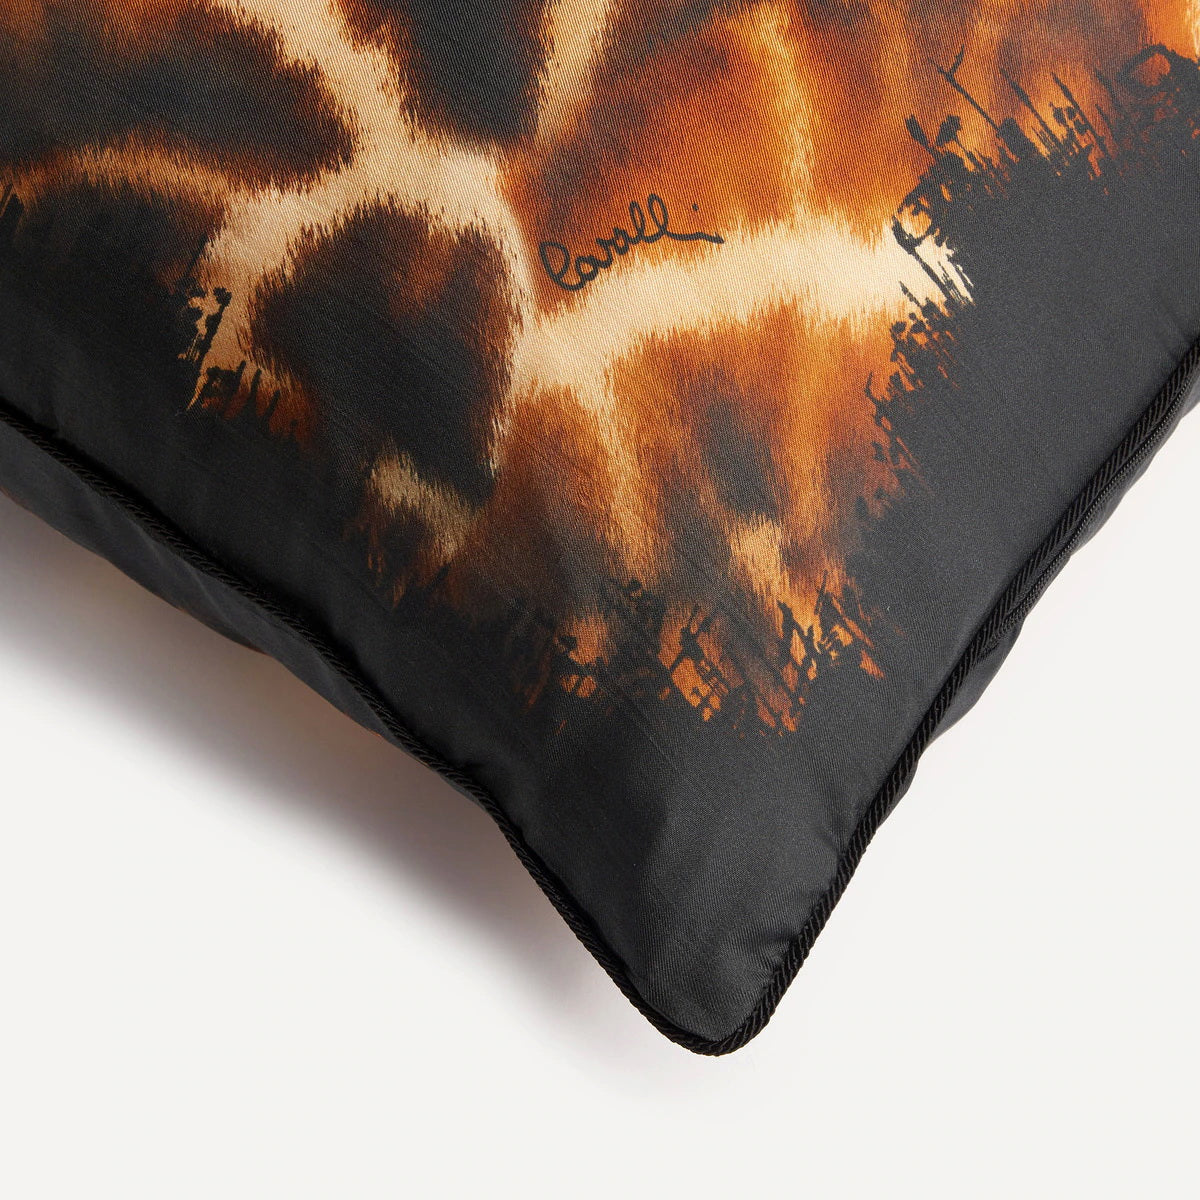 Decorative pillow Giraffa Roberto Cavalli (silk)